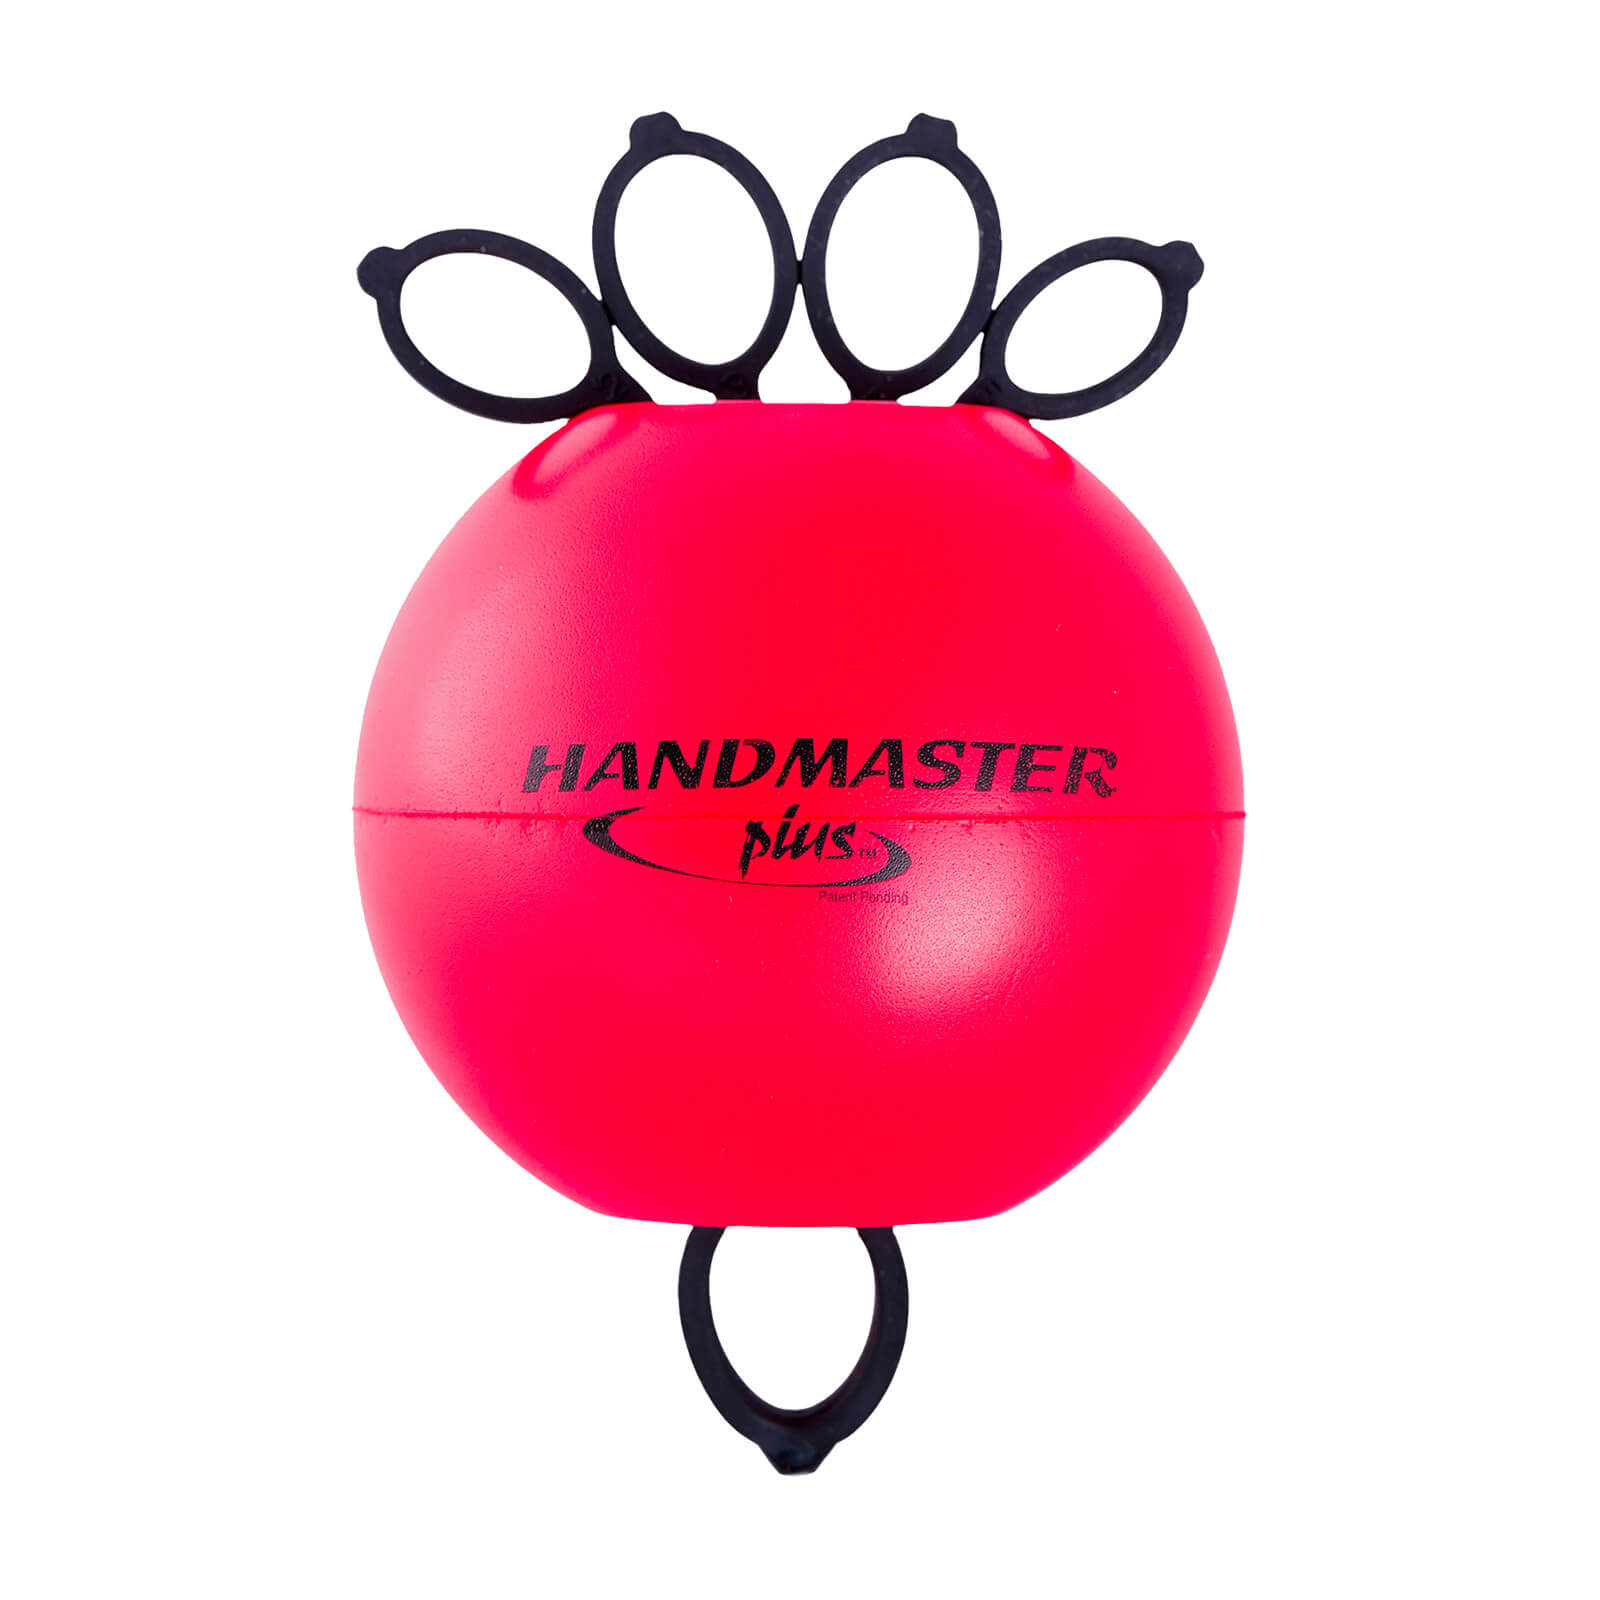 Handmaster Plus - Rouge et noir - Moyen